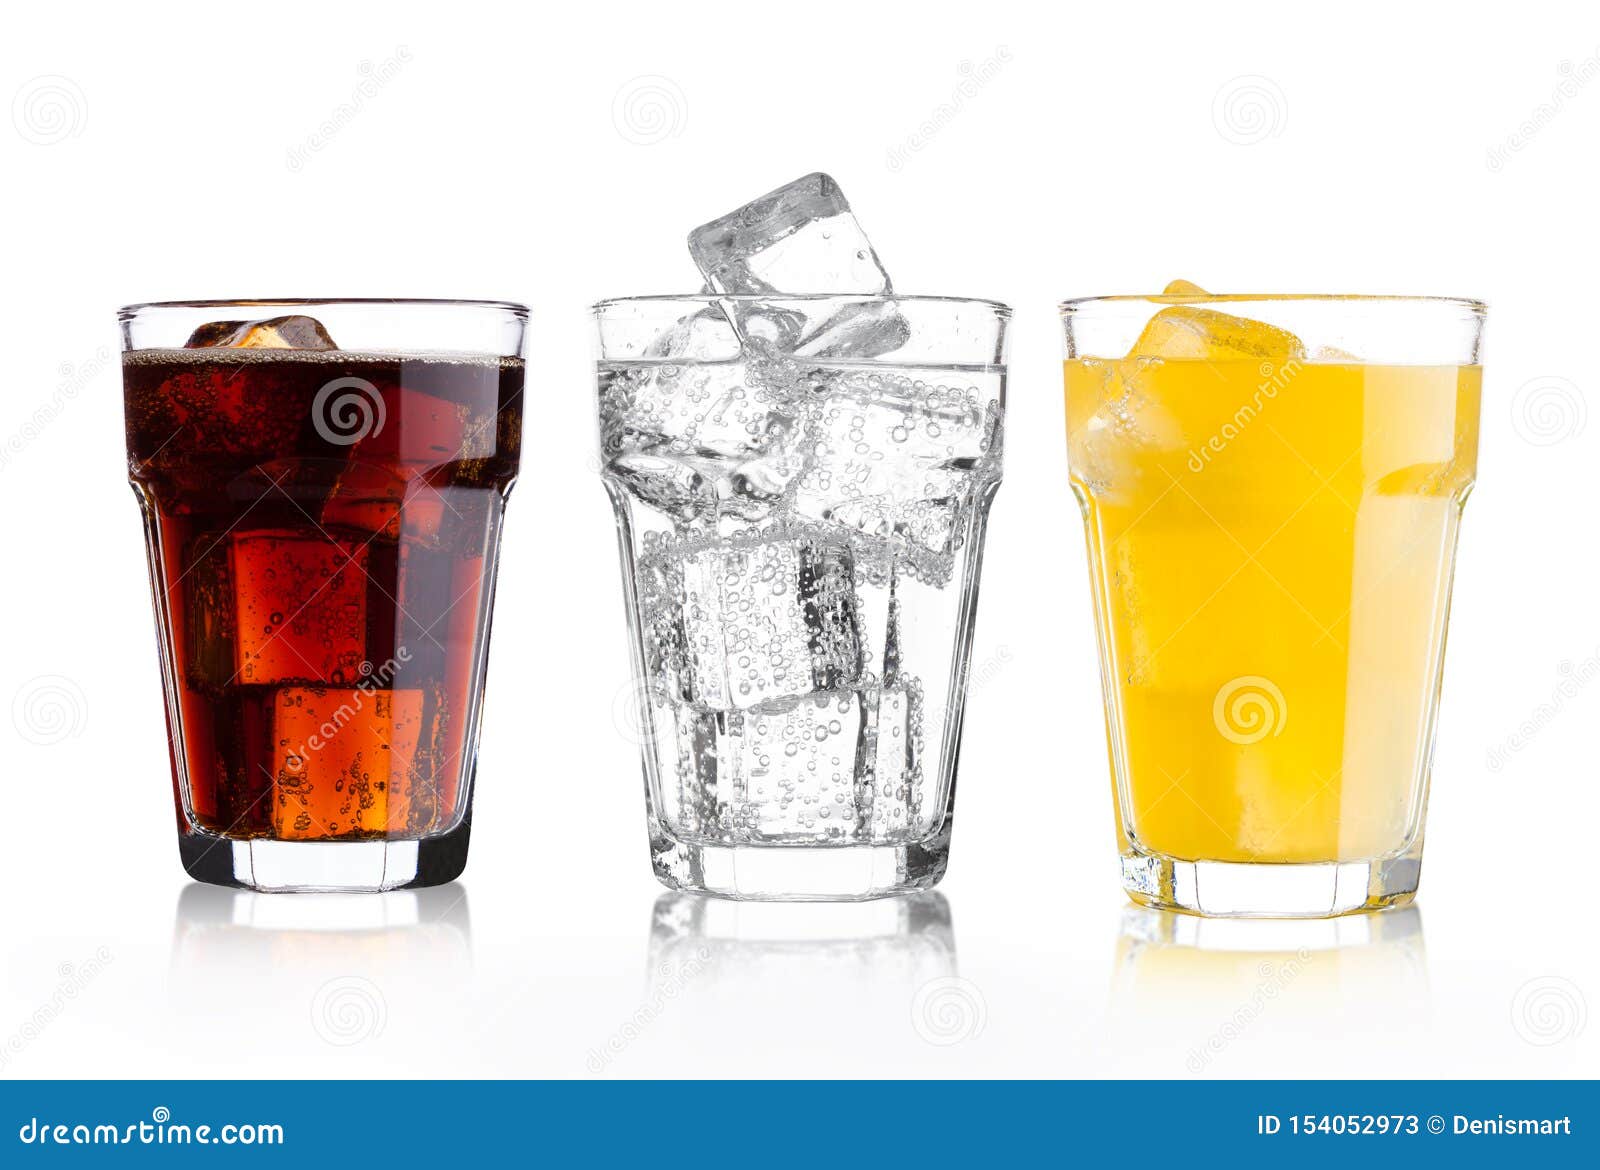 Premium Photo  Glasses of soda flavors orange lemon and cola